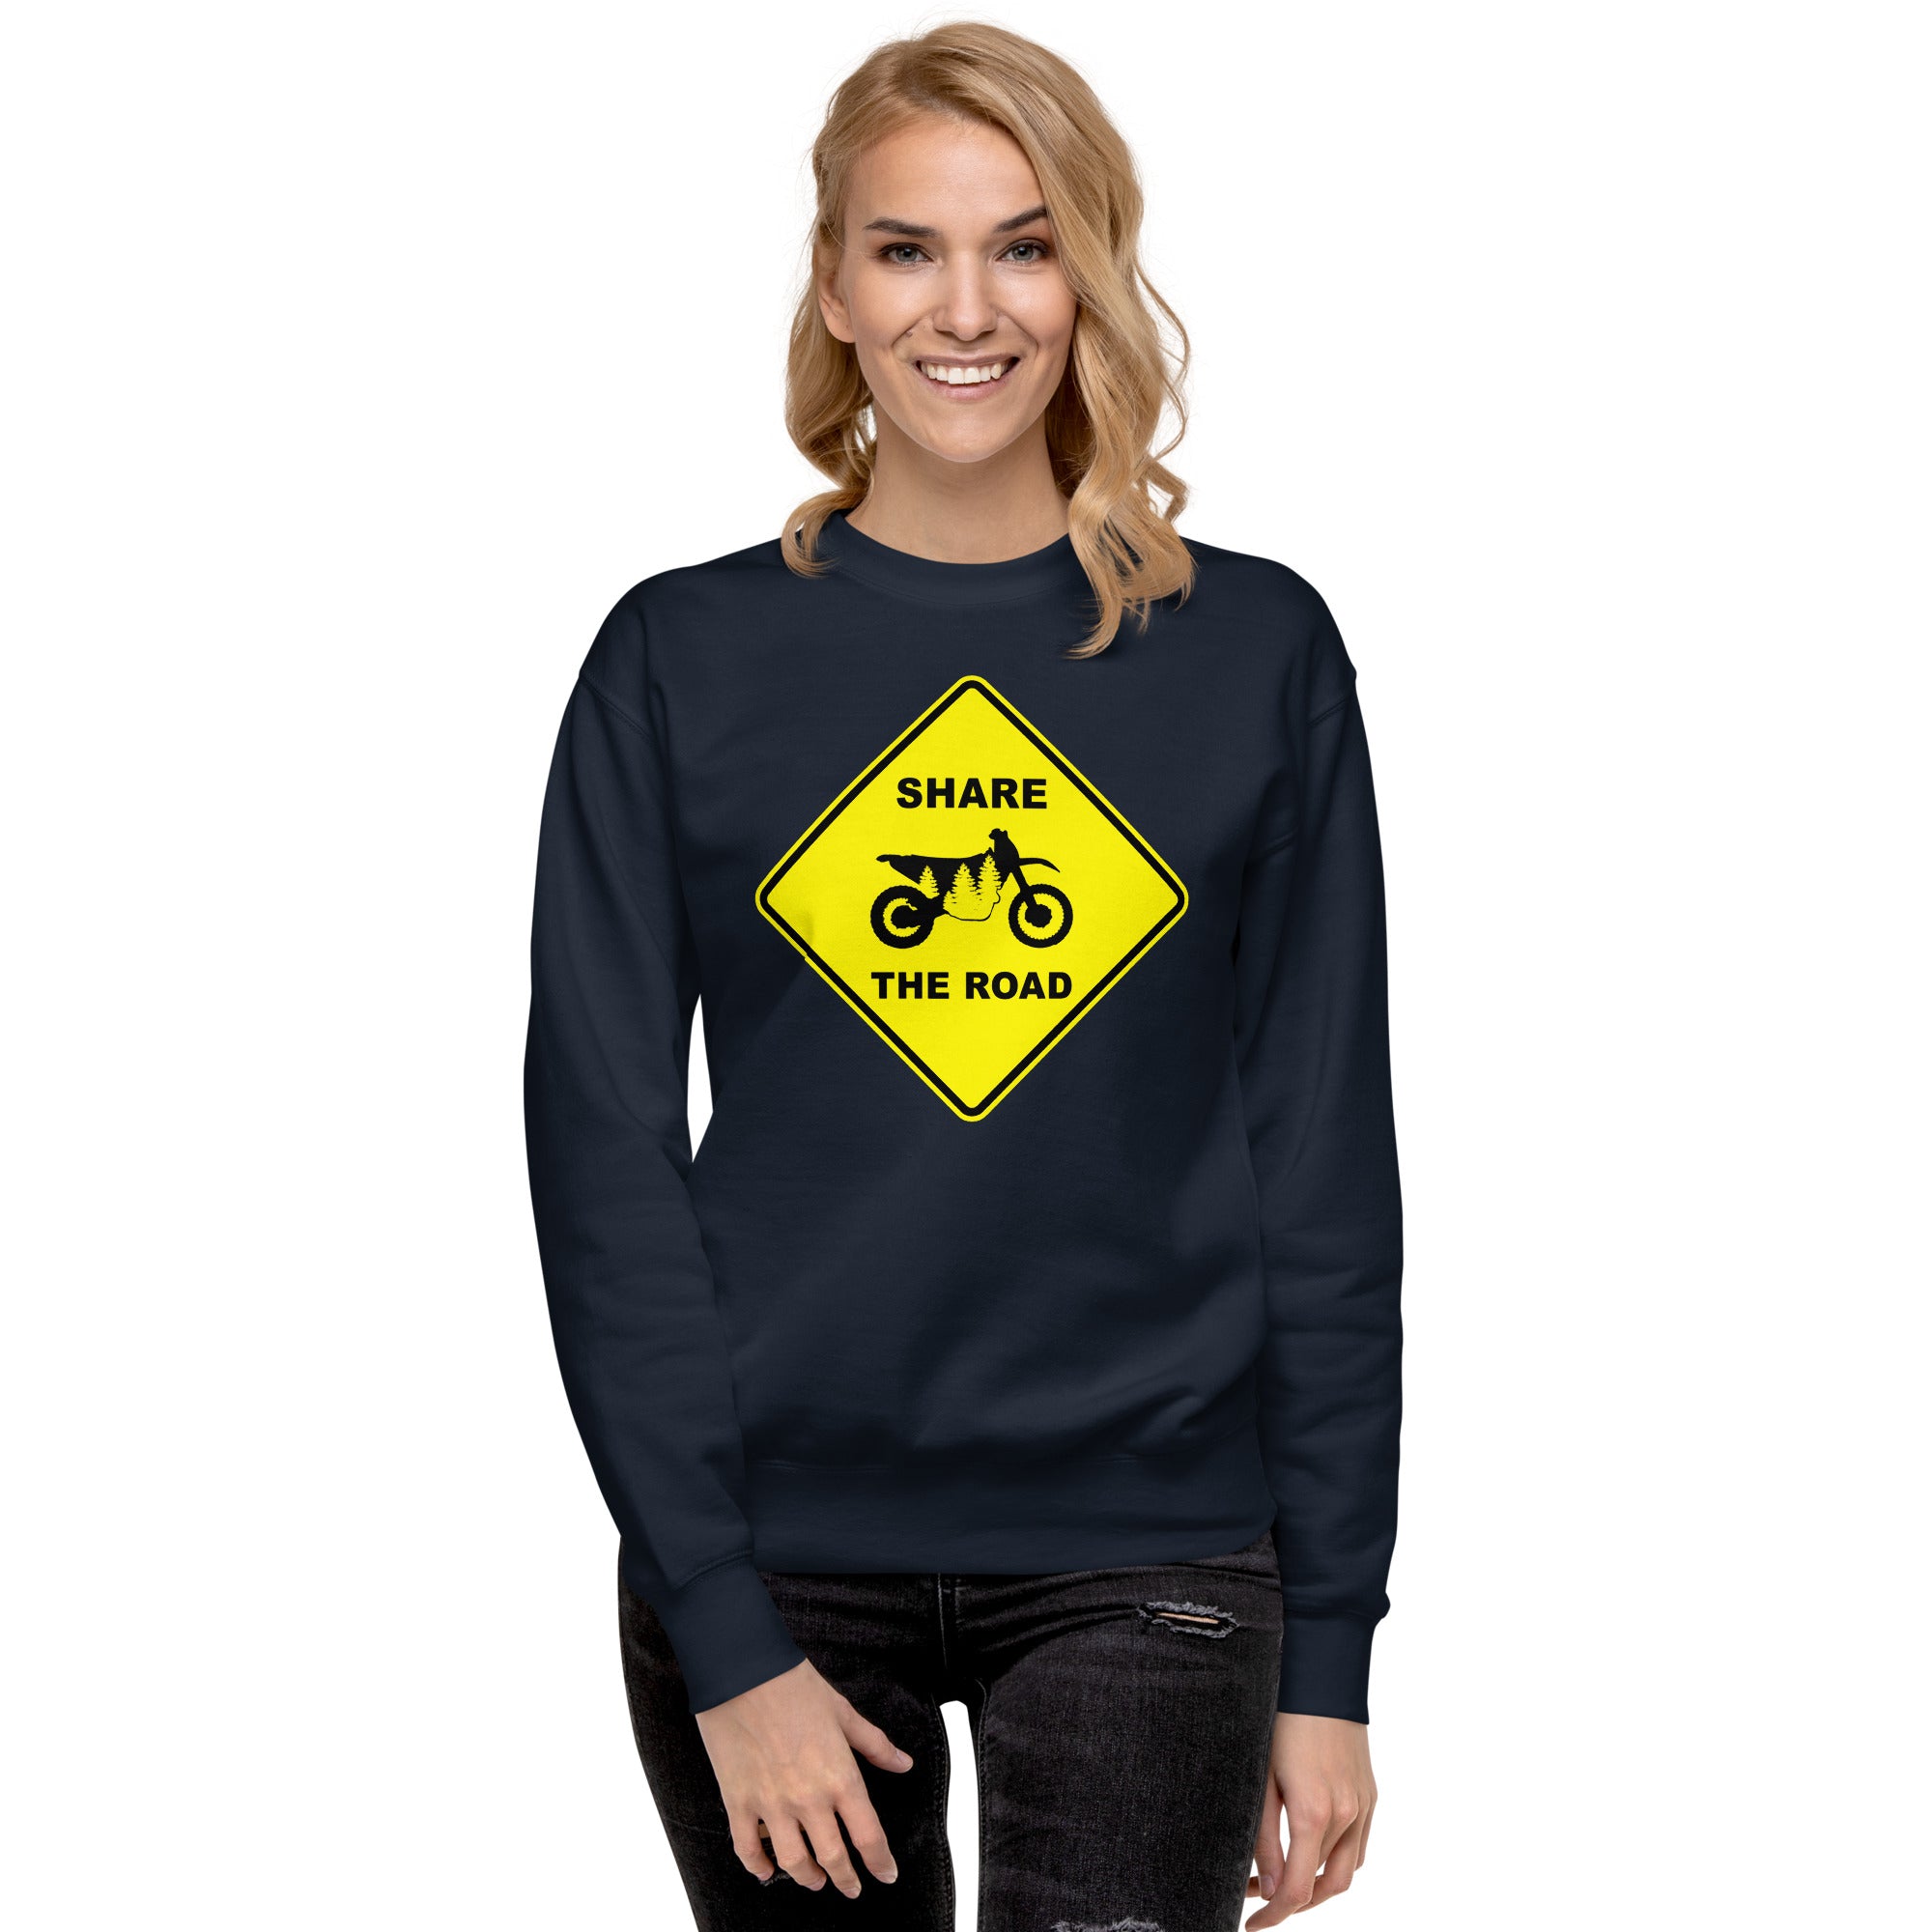 Share The Road Sweater, Premium